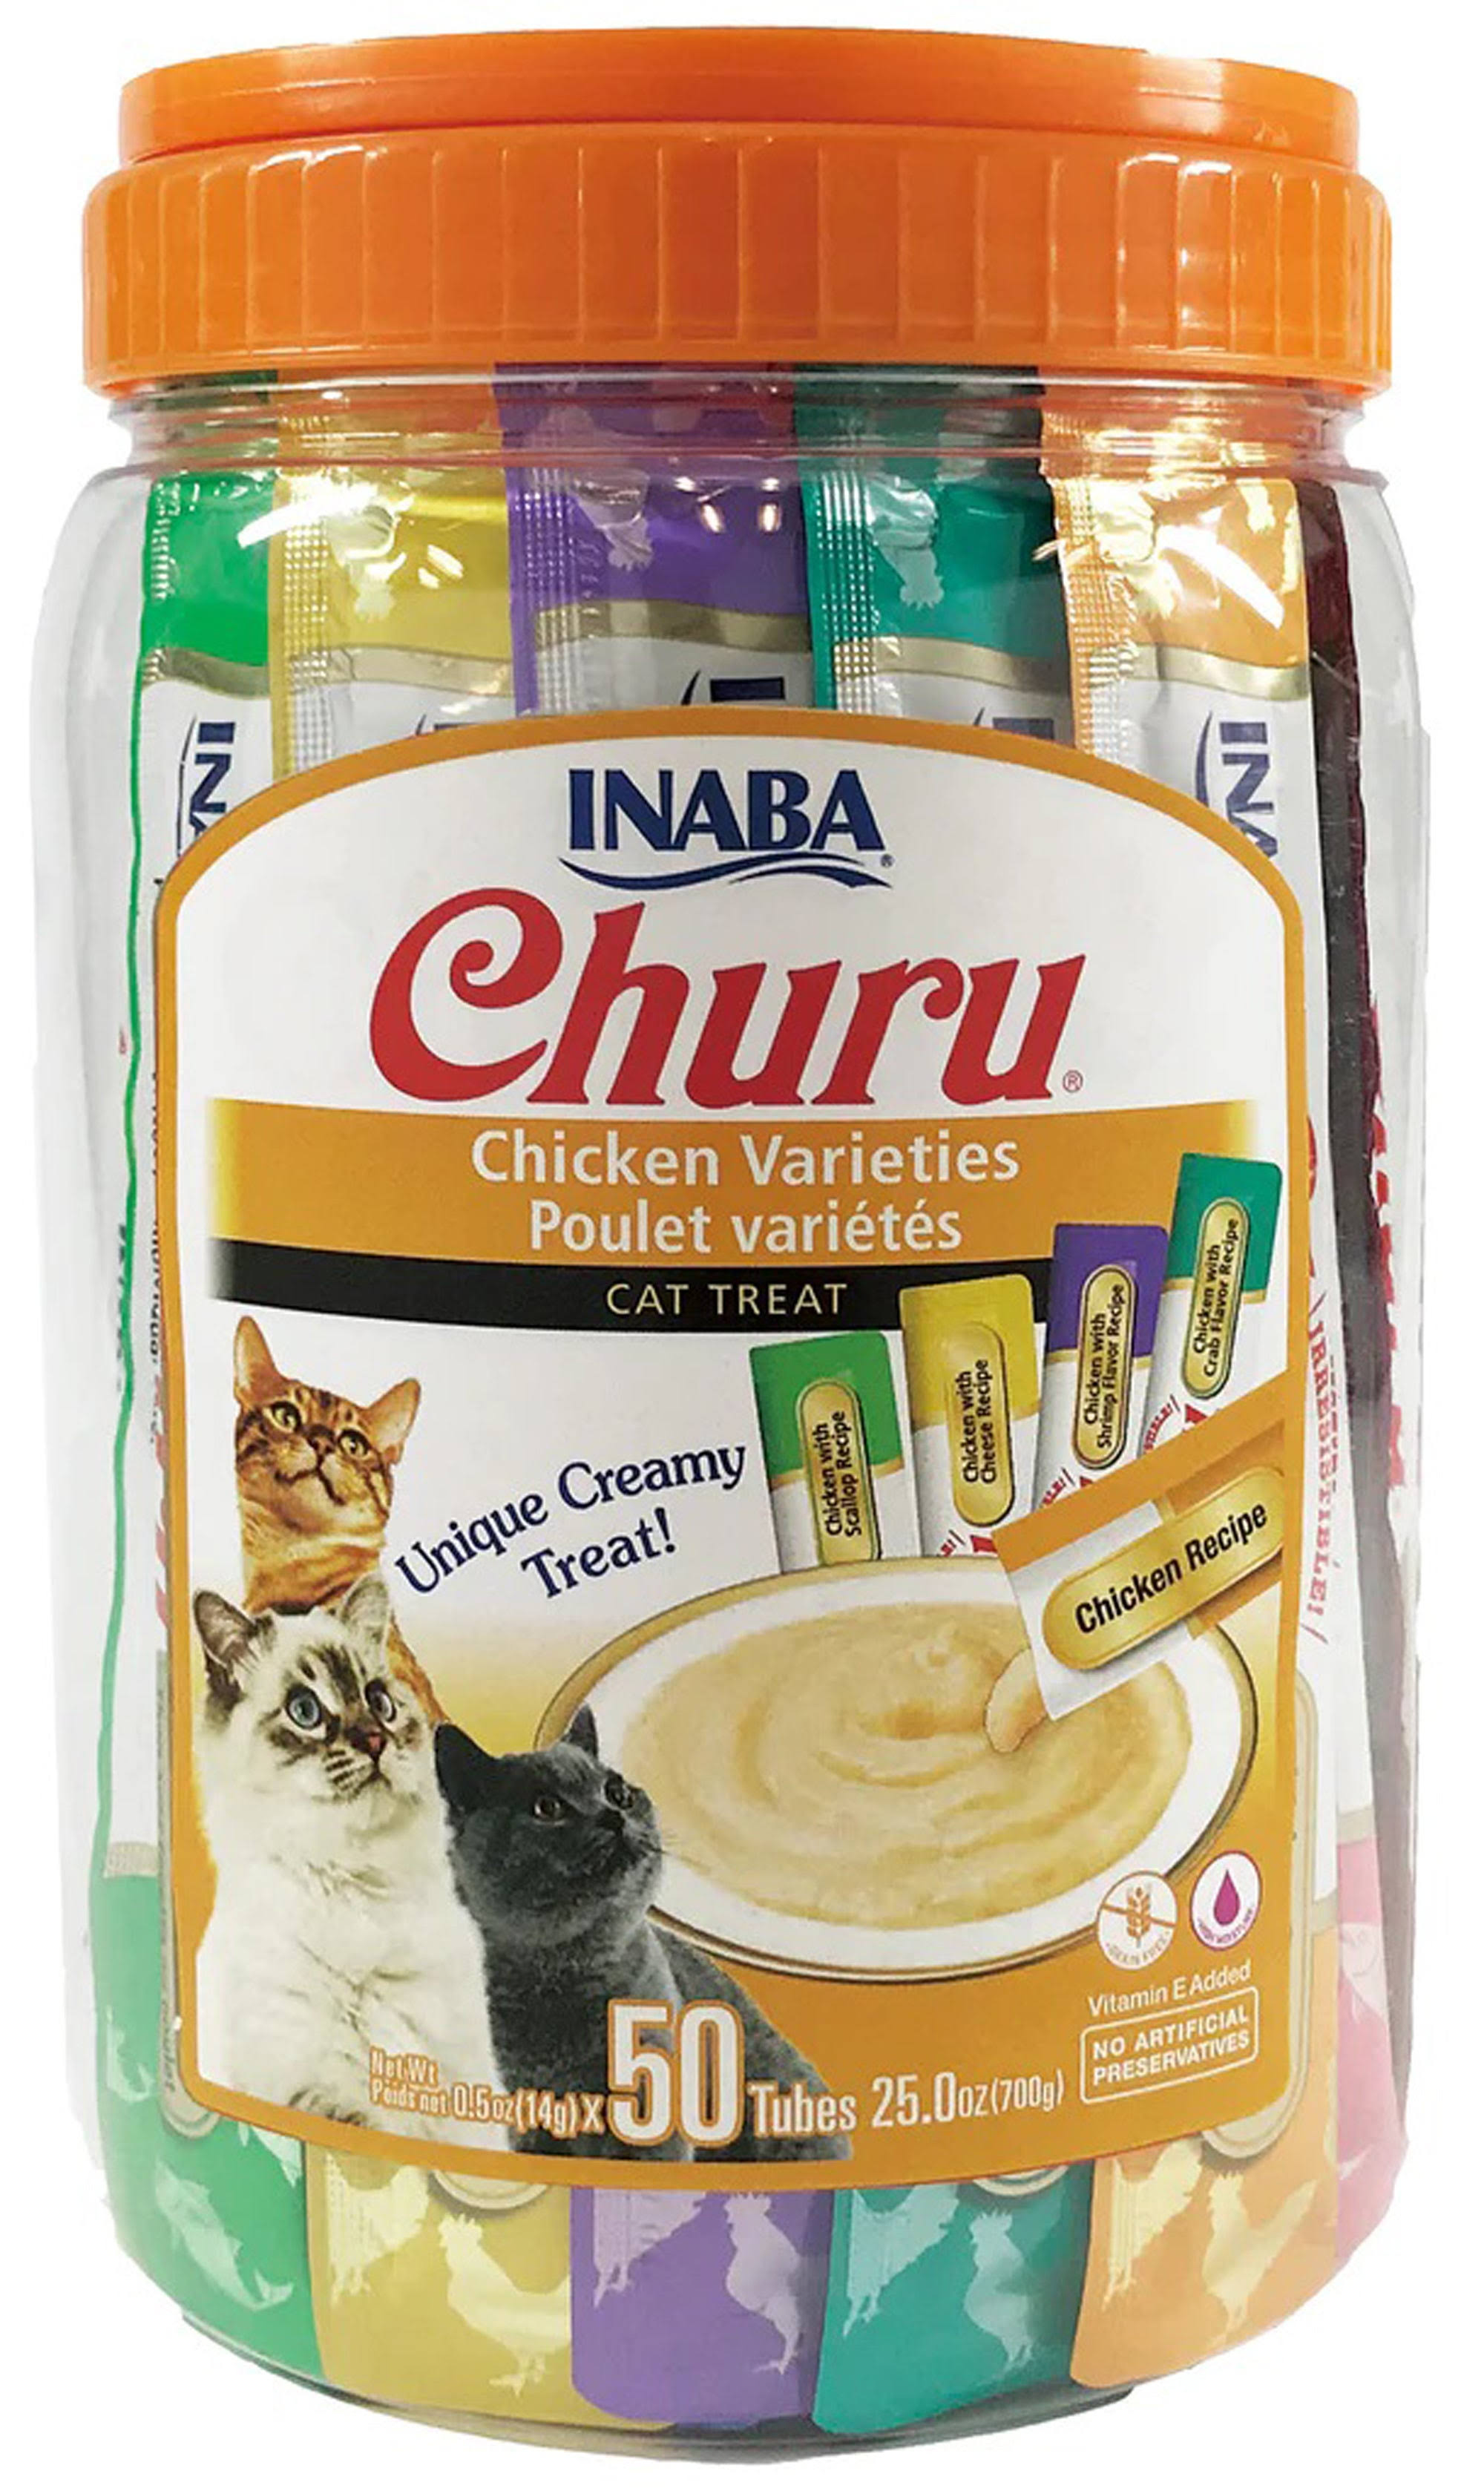 Inaba Churu Puree Chicken Varieties Cat Treats 50 Tubes